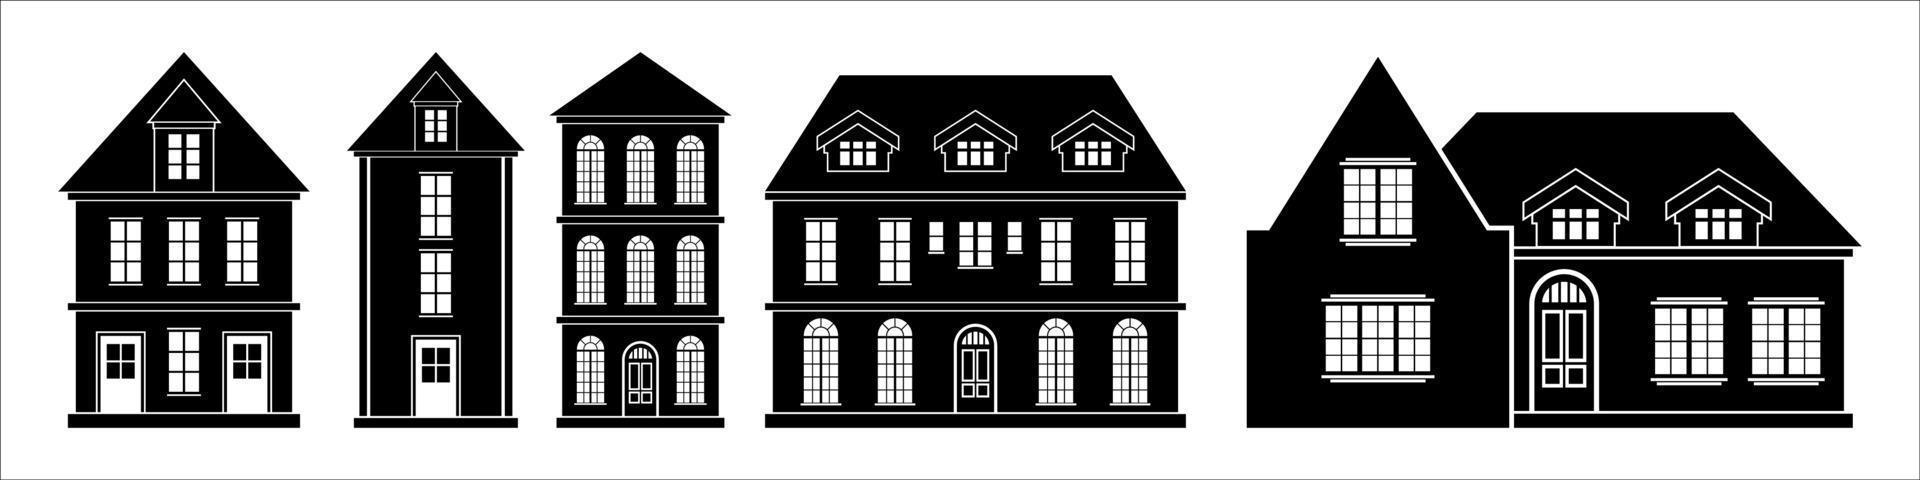 casa silueta, negro hogar vector en blanco fondo, para real inmuebles arquitectura diseño